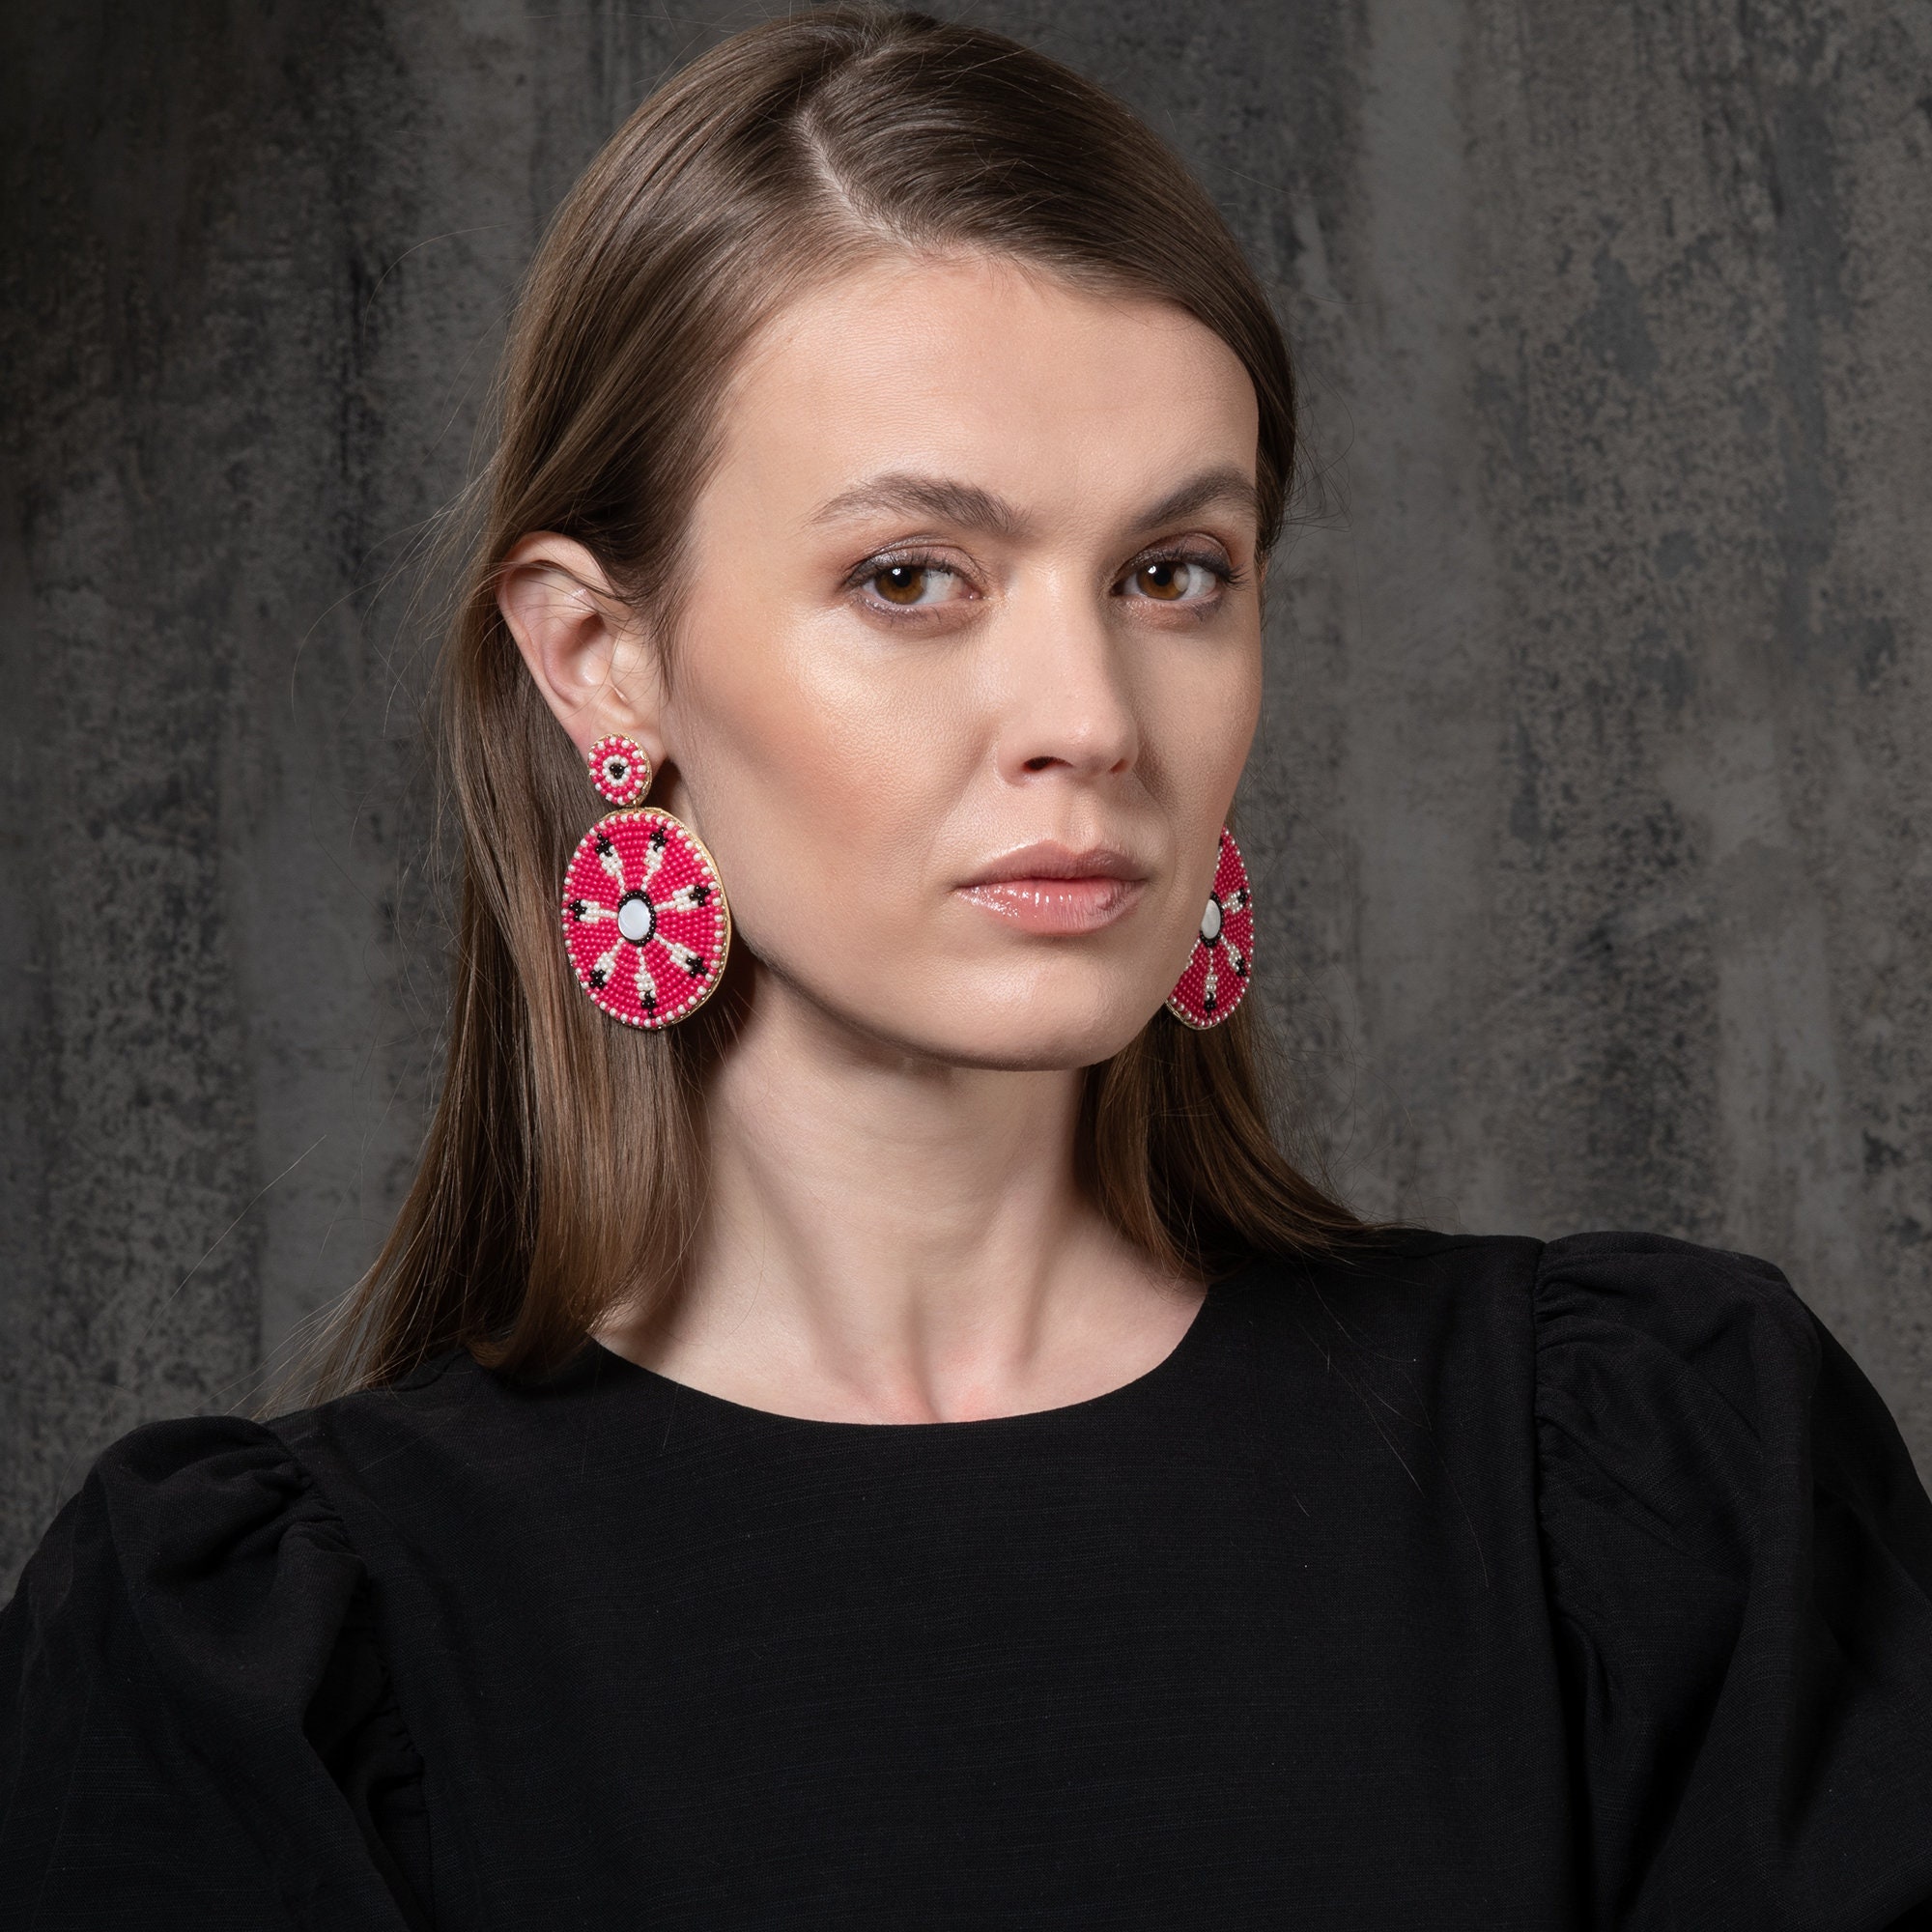 Buy Large dark pink earrings at Amazonin